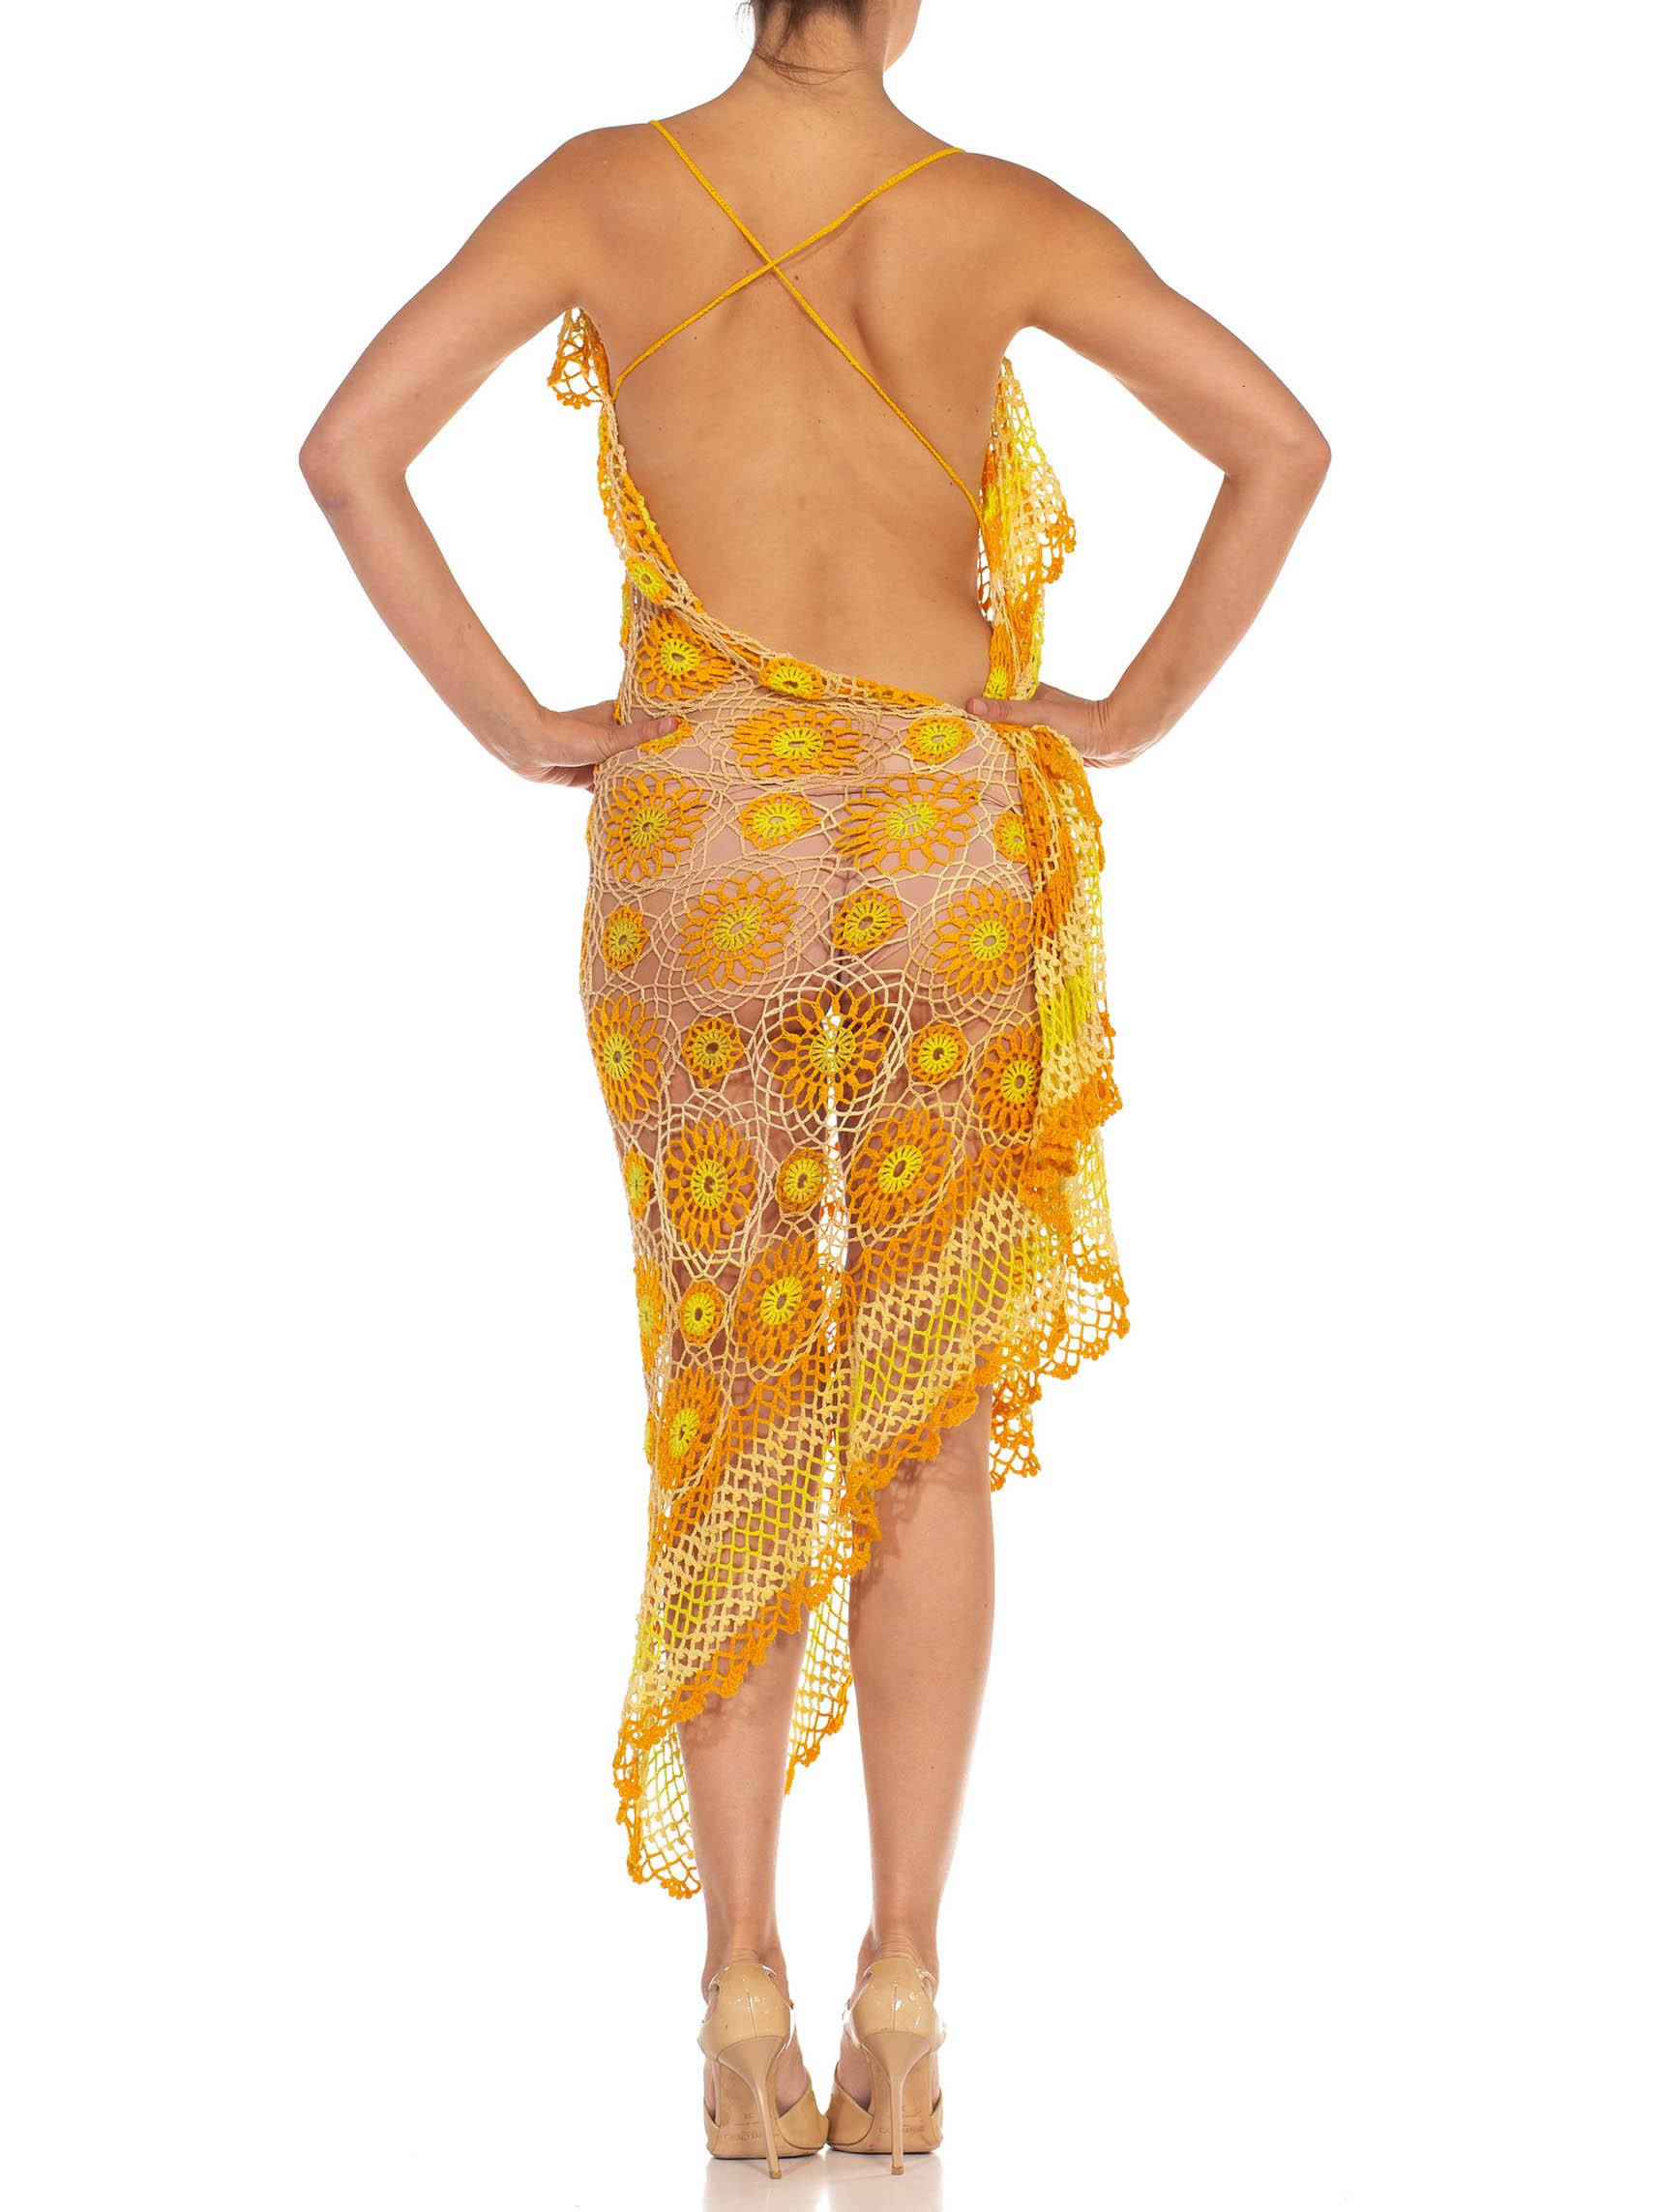 Morphew Collection Orange Yellow & White Cotton Floral Crochet Sexy Dress 2